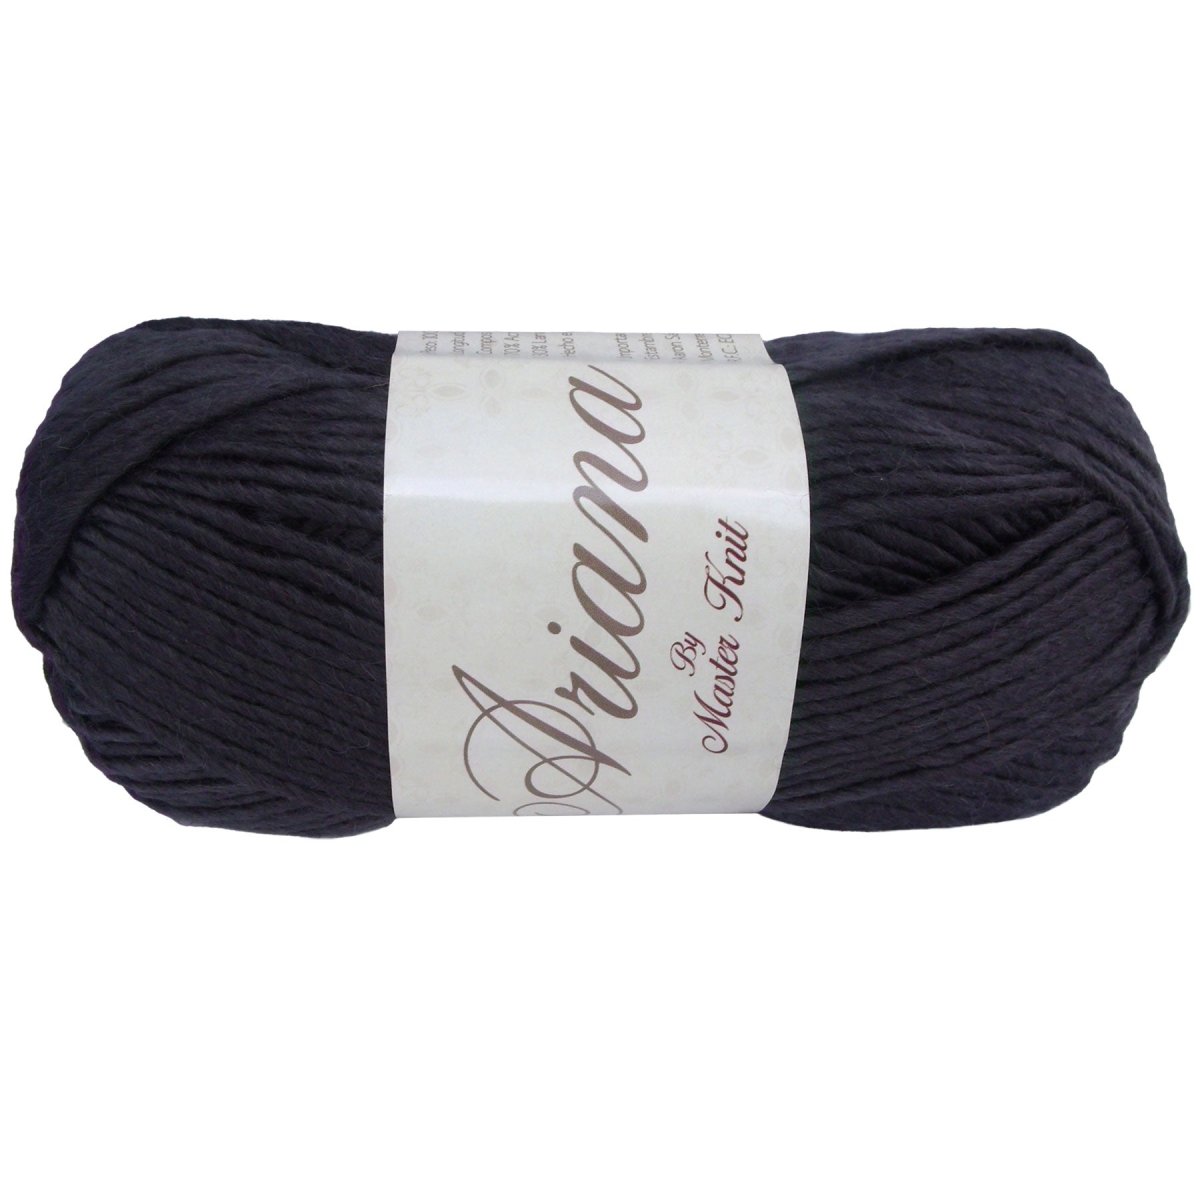 ARIANA - Aran - Crochetstores9510-193